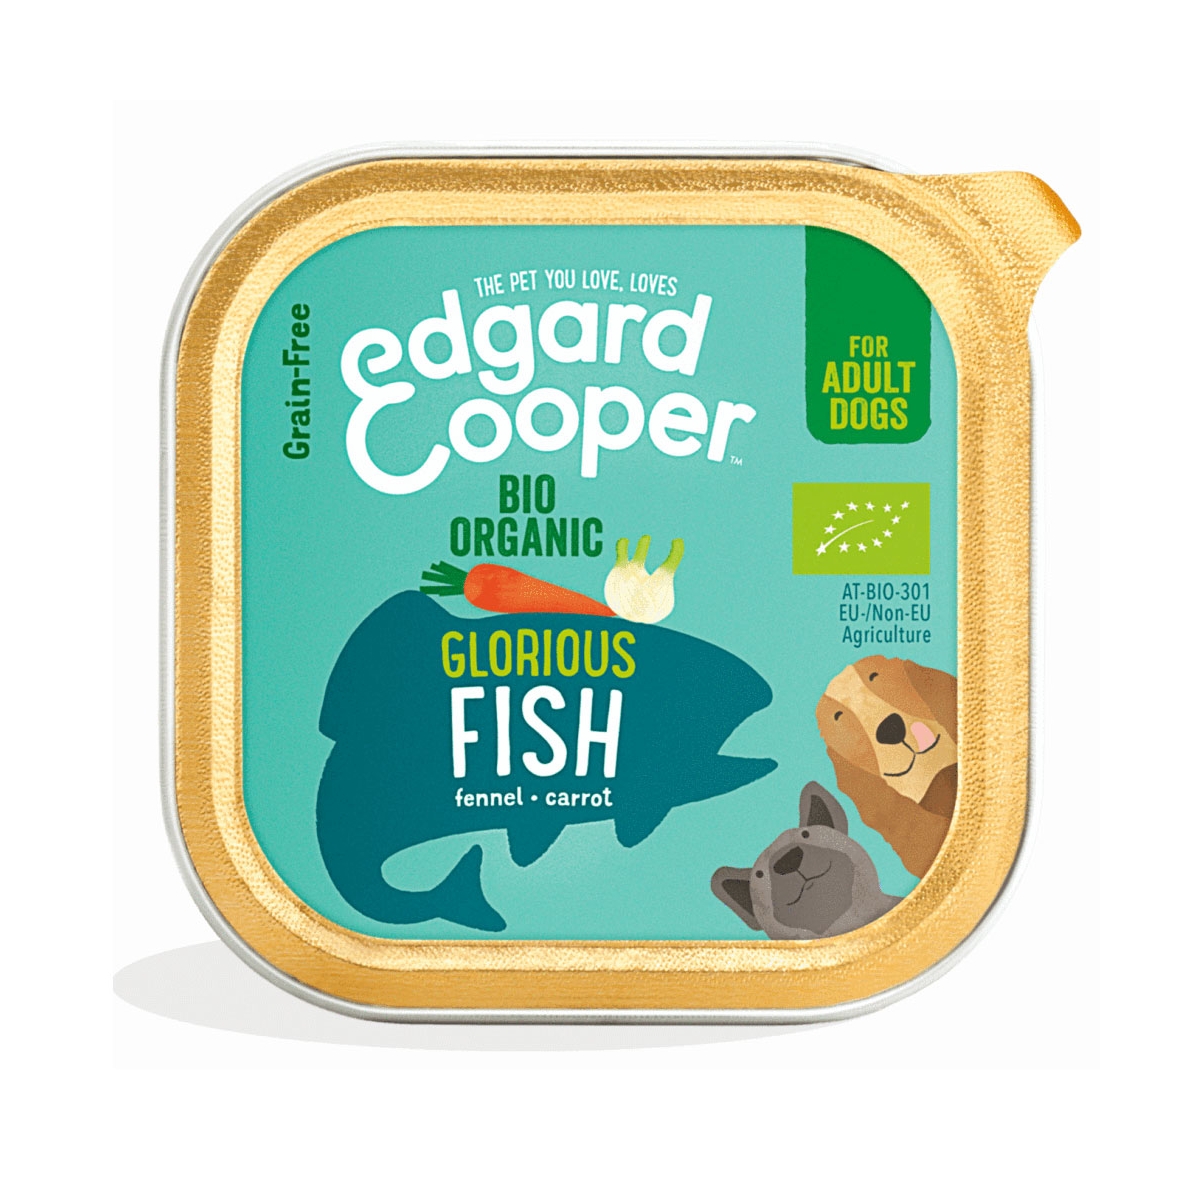 Edgard Cooper konservai šunims su organine žuvimi, 100g